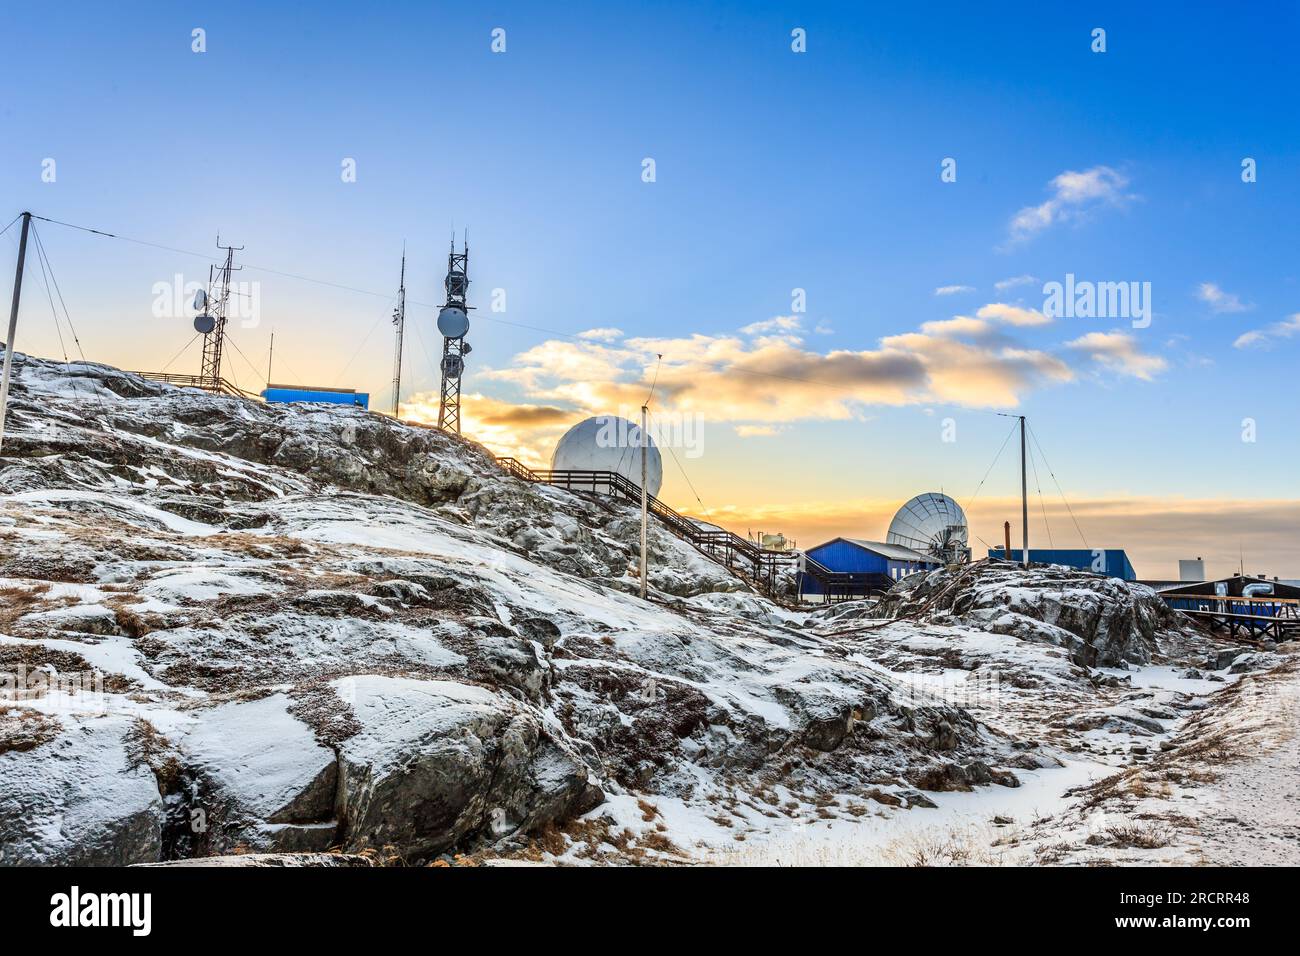 Arctic telecommunication station in sunset rays among snow rocks, Nuuk, Greenland Stock Photo